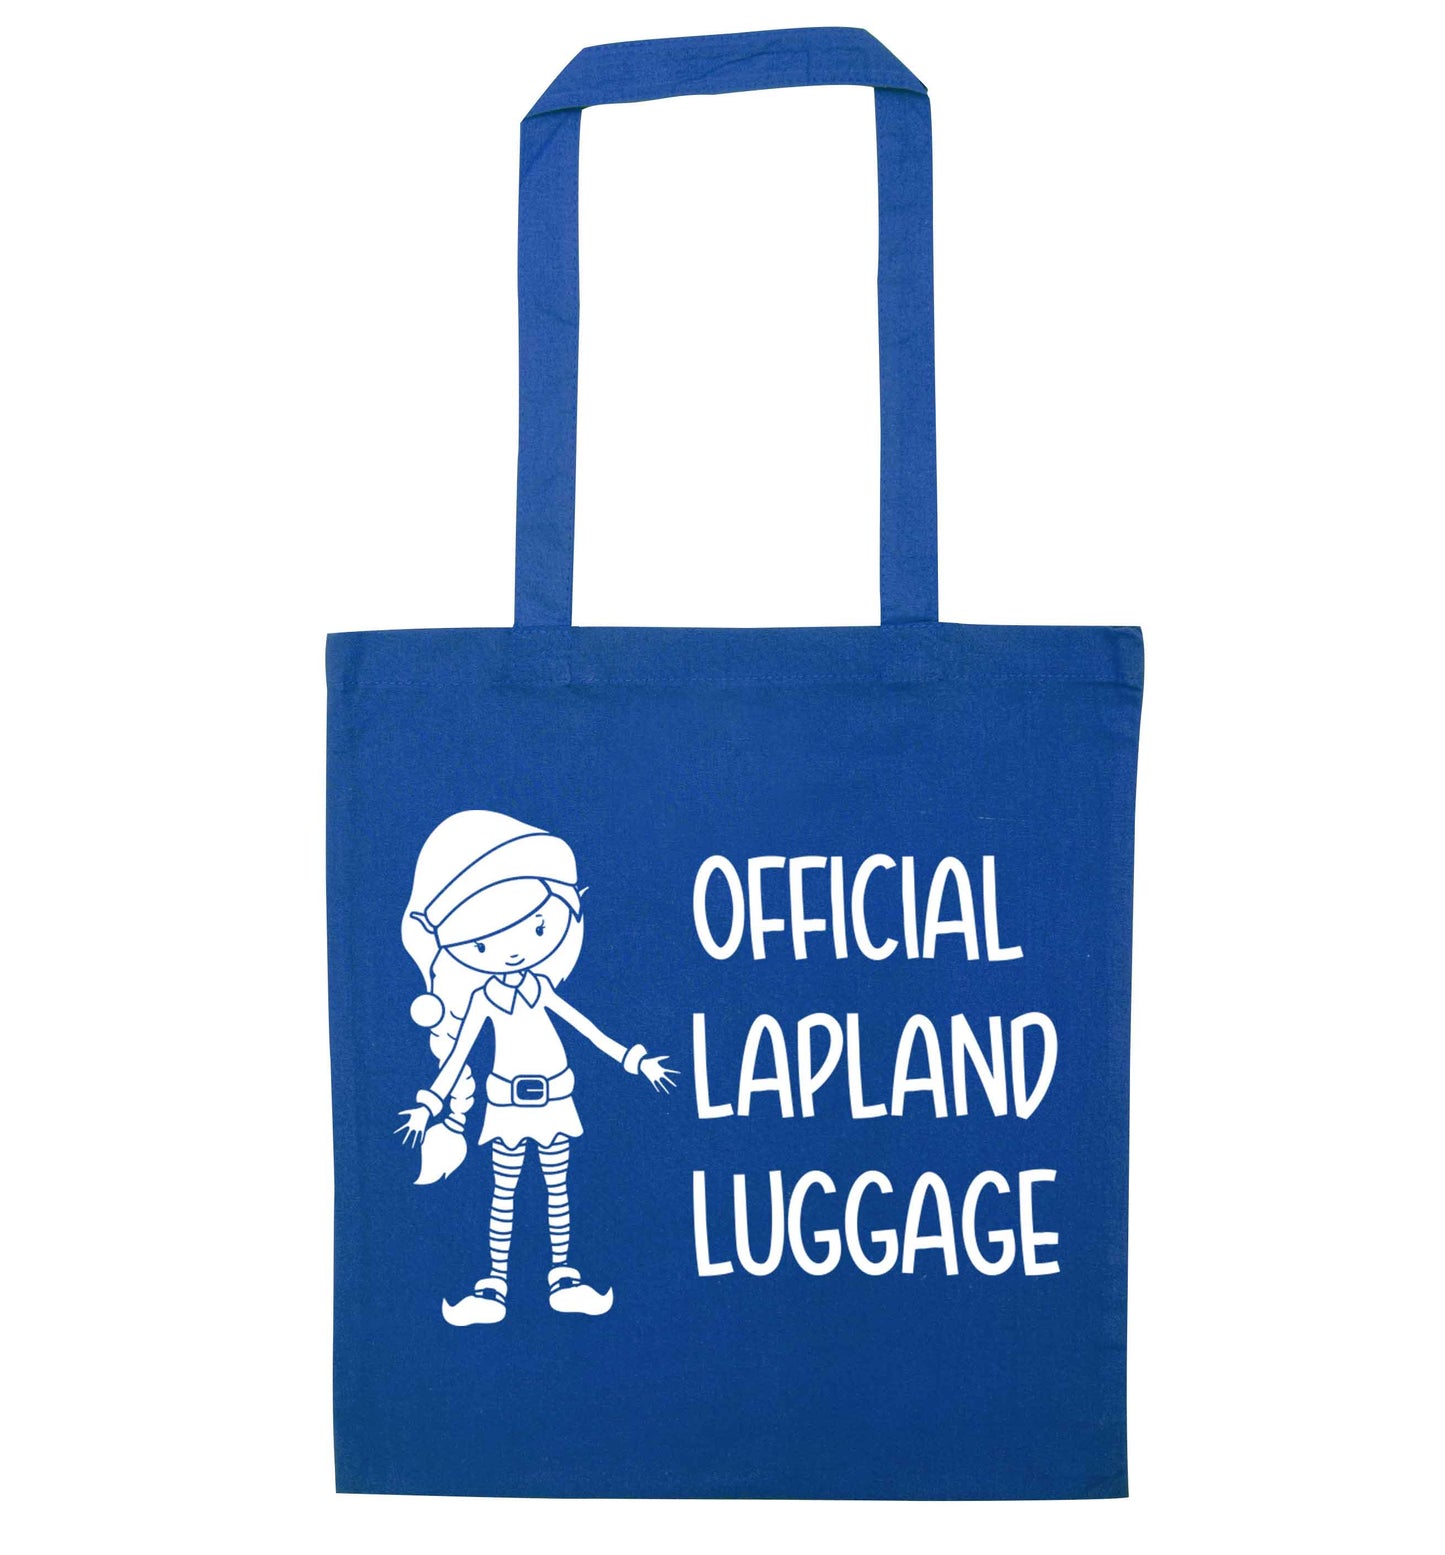 Official lapland luggage - Elf snowflake blue tote bag